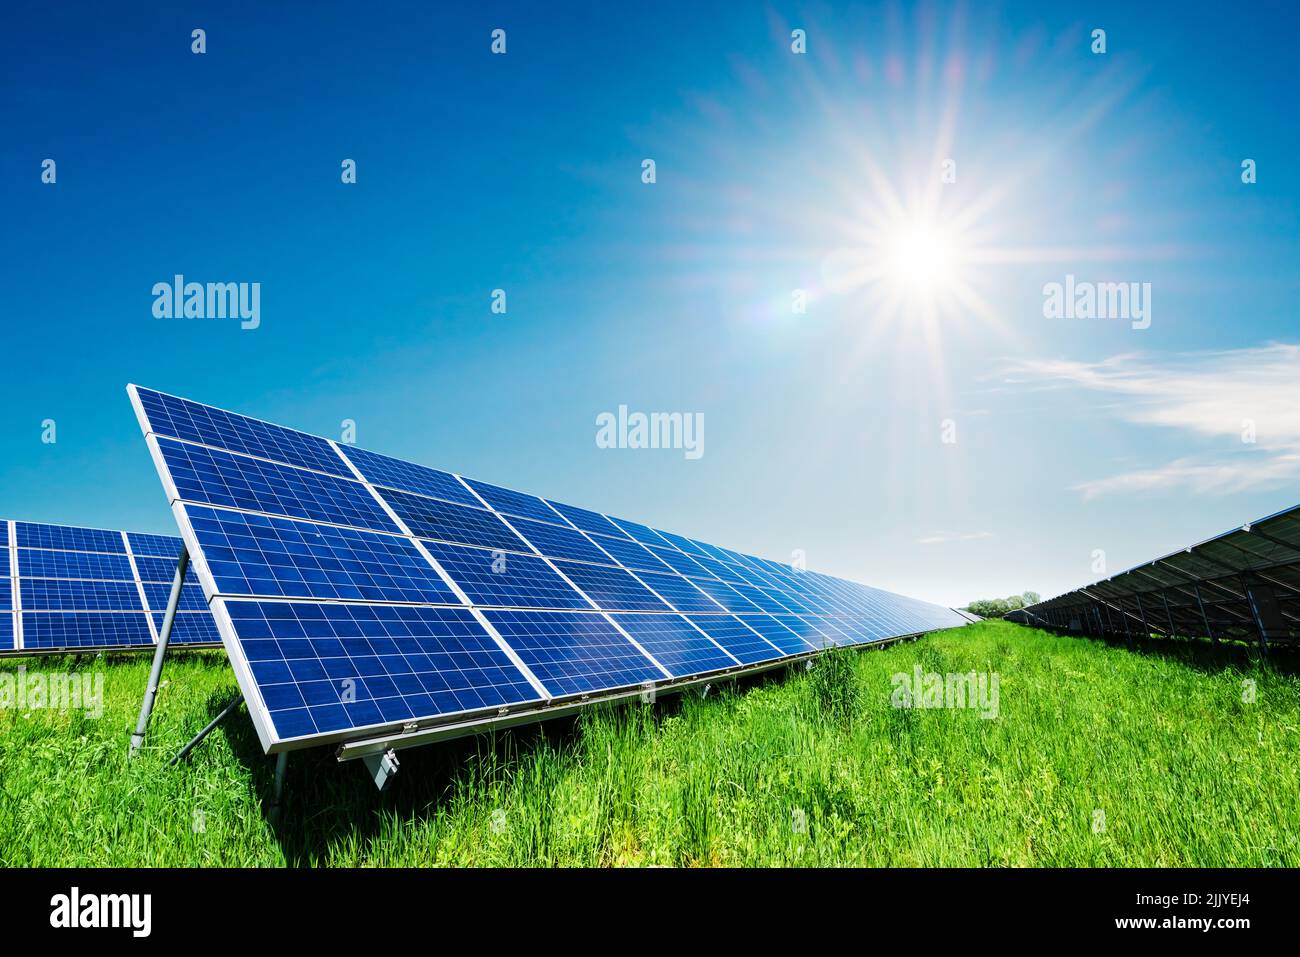 Solar panel under blue sky with sun. Green grass and cloudy sky. Alternative energy concept Stock Photo